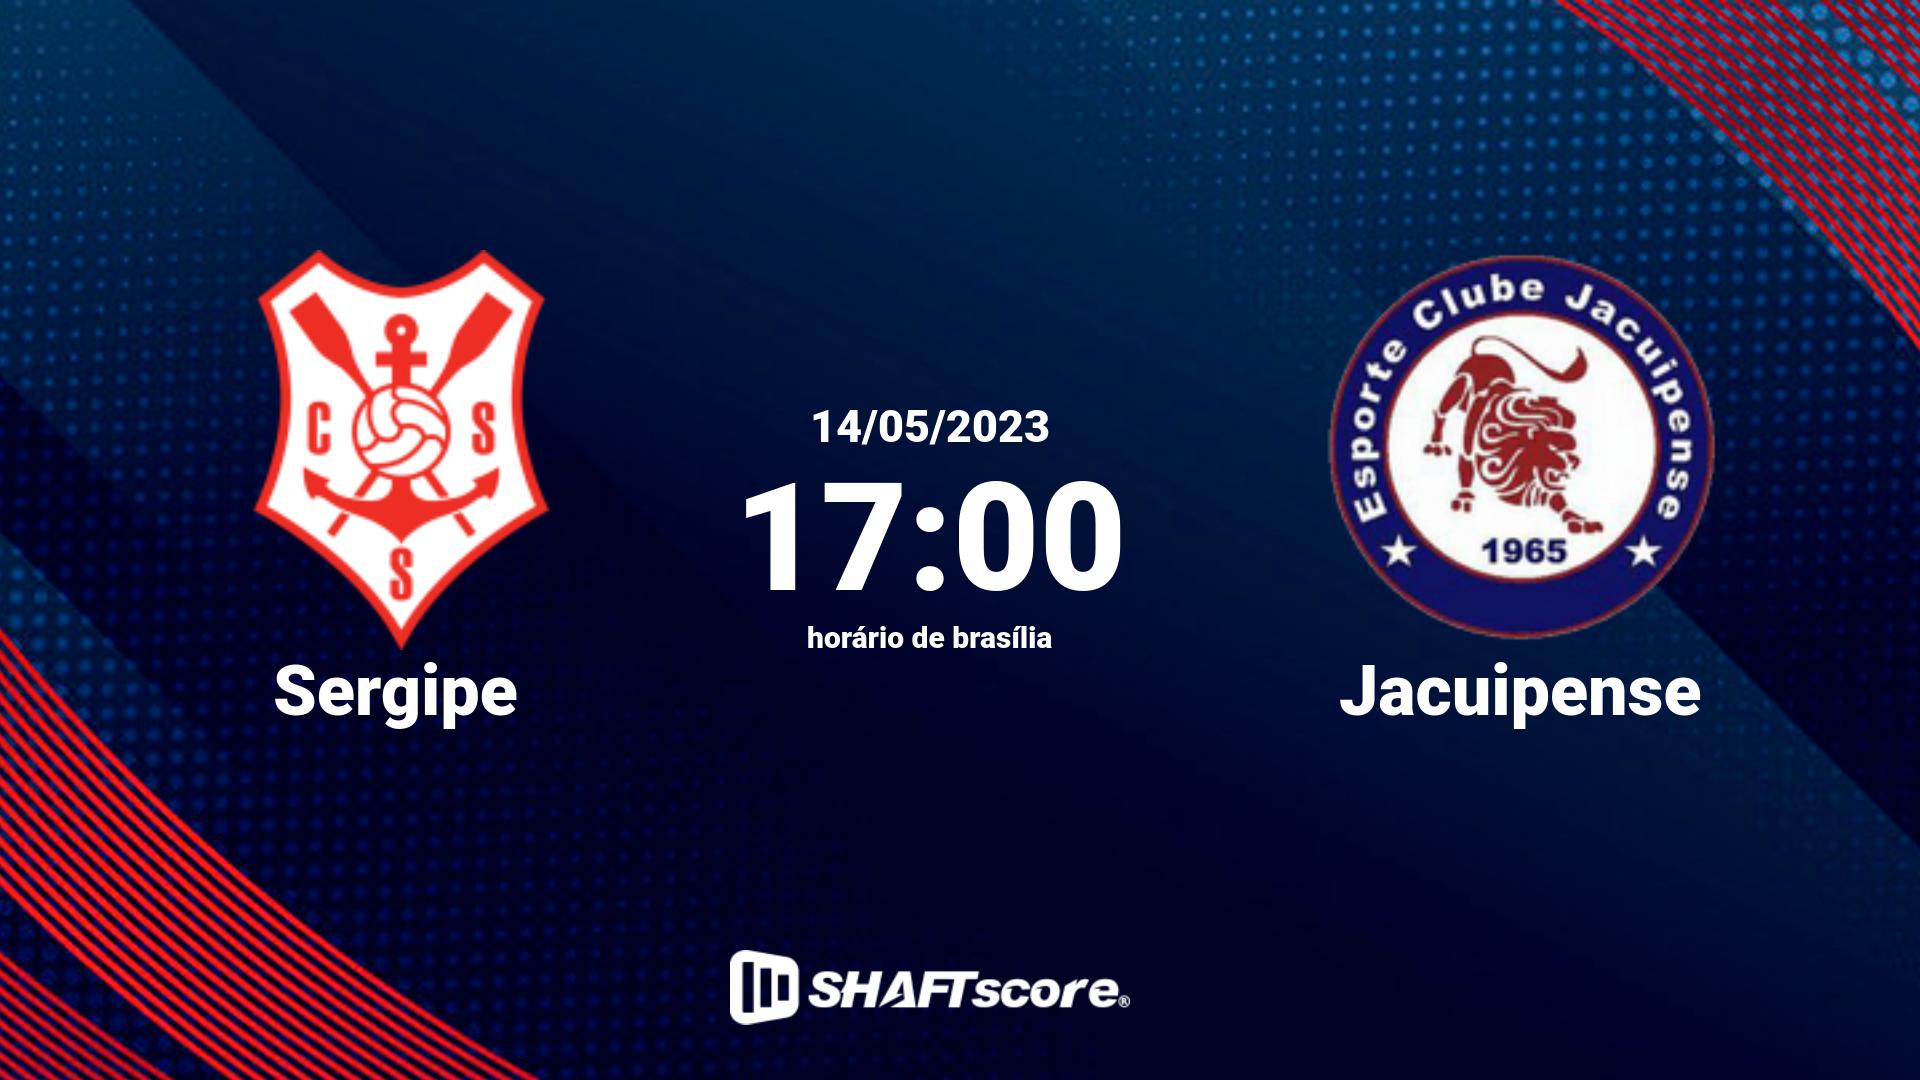 Estatísticas do jogo Sergipe vs Jacuipense 14.05 17:00